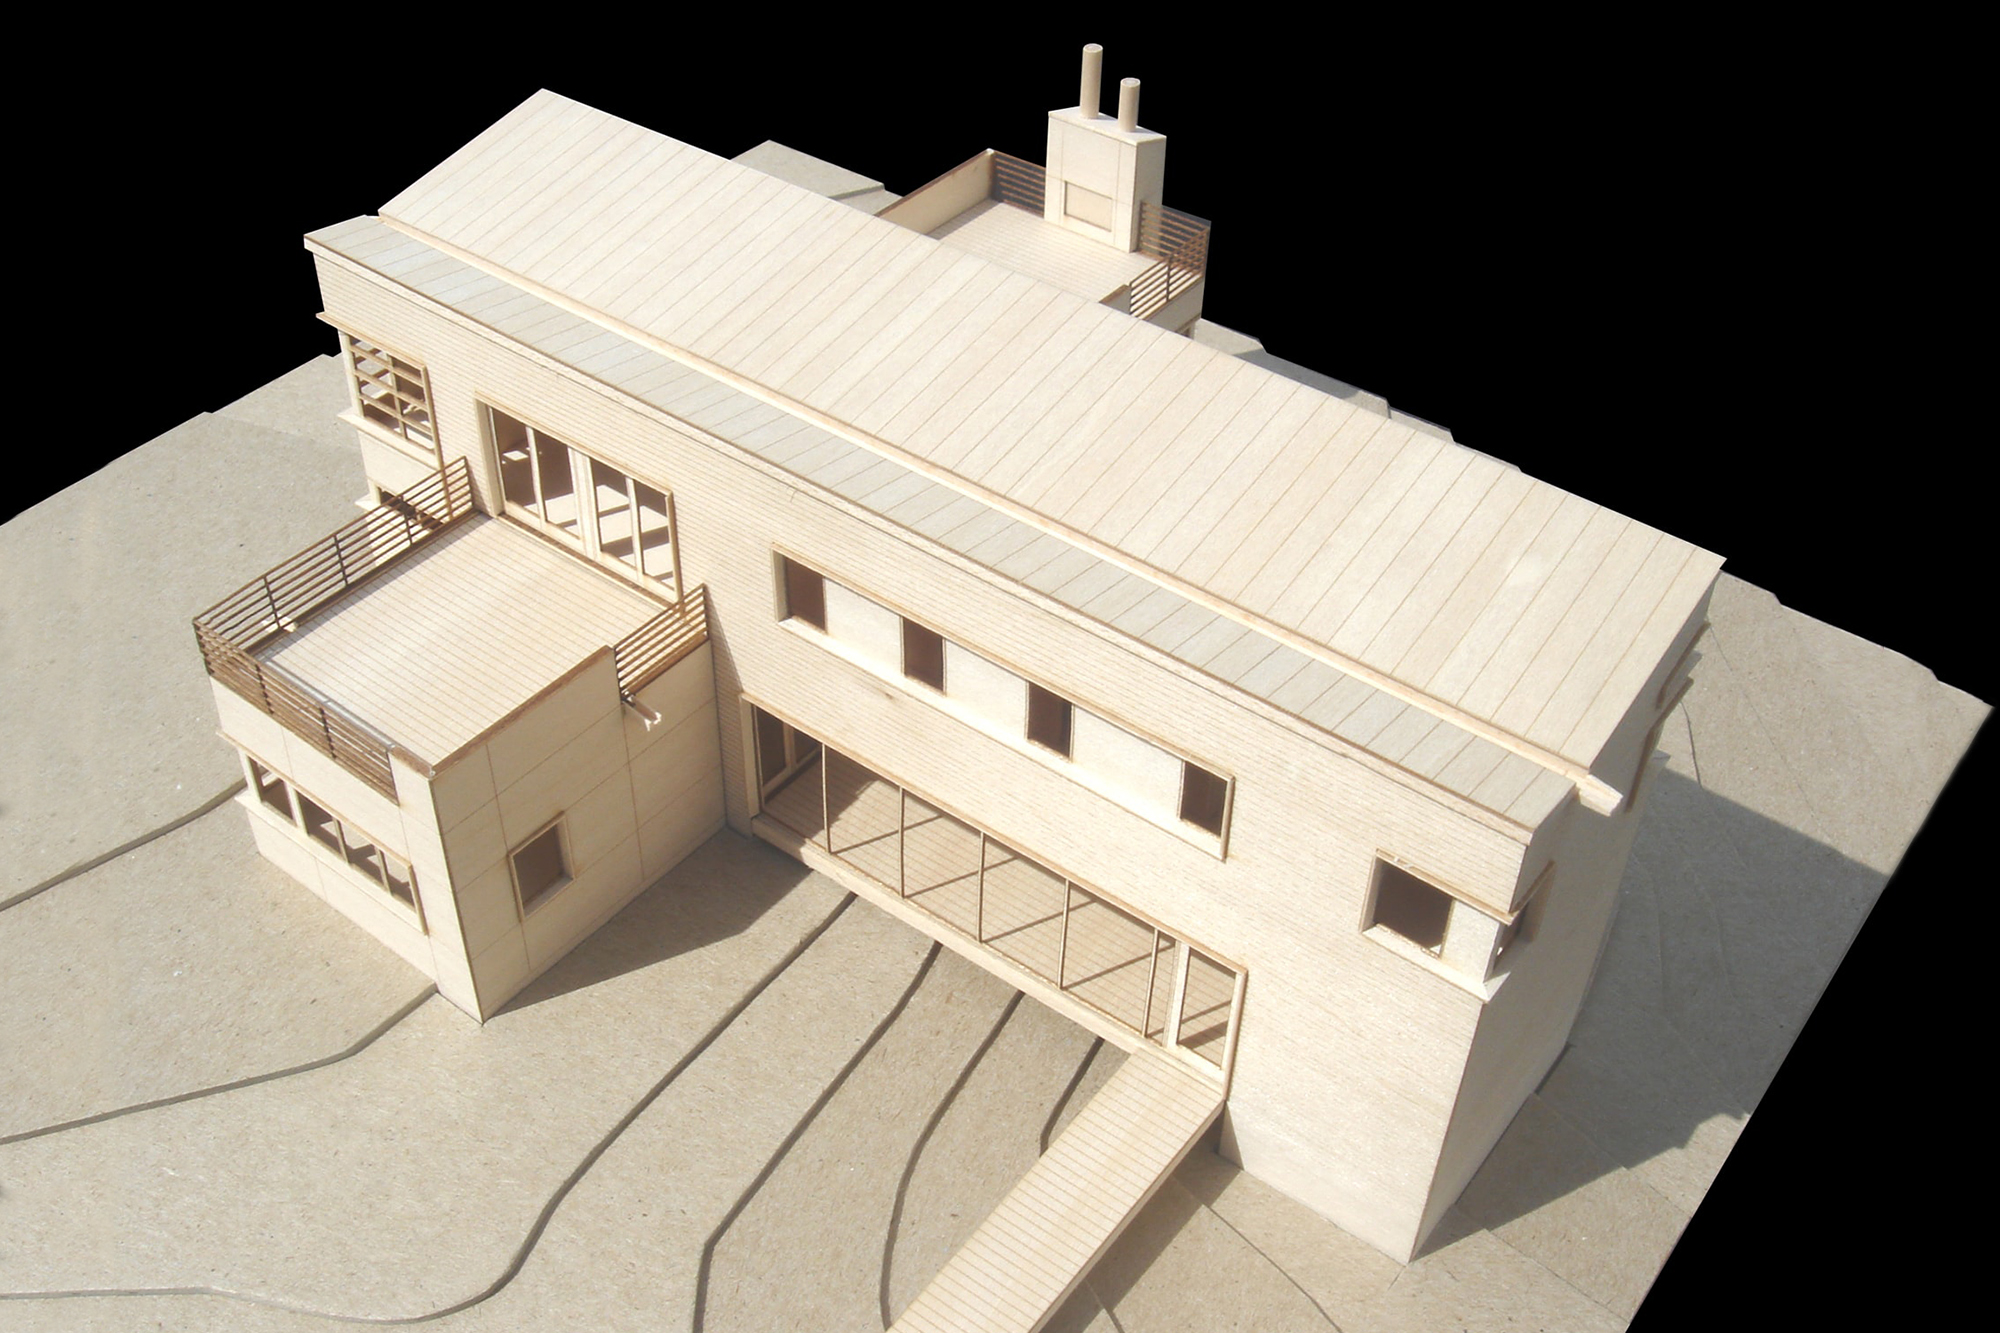 res4-resolution-4-architecture-berkshire house-model-01.jpg